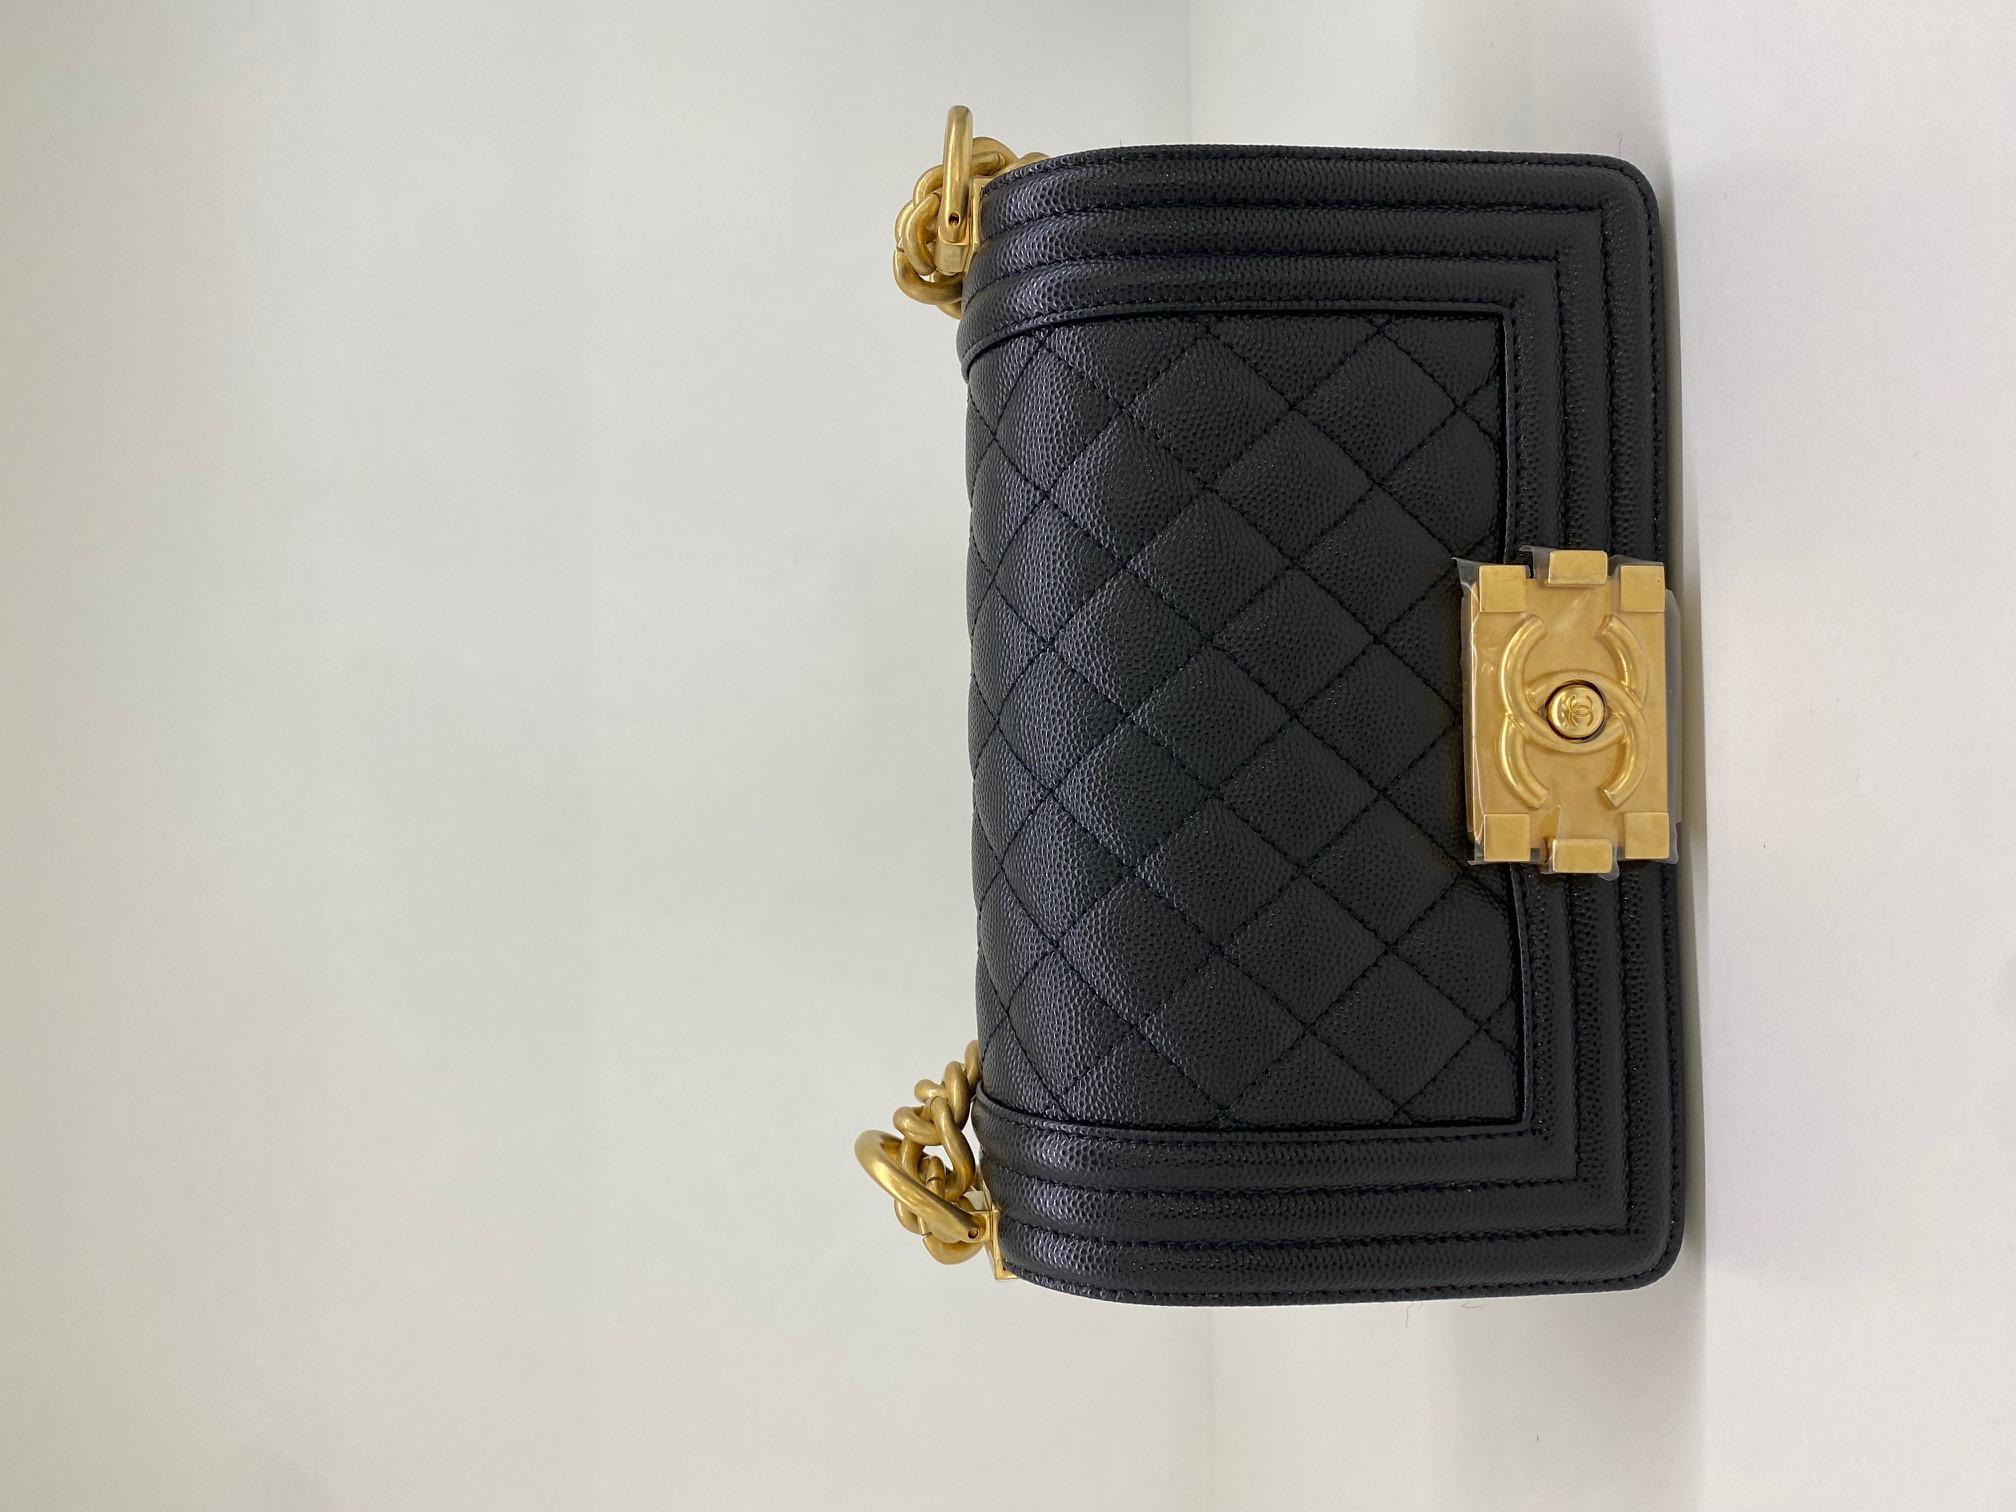 Chanel Boy Bag Small Black GHW For Sale 5